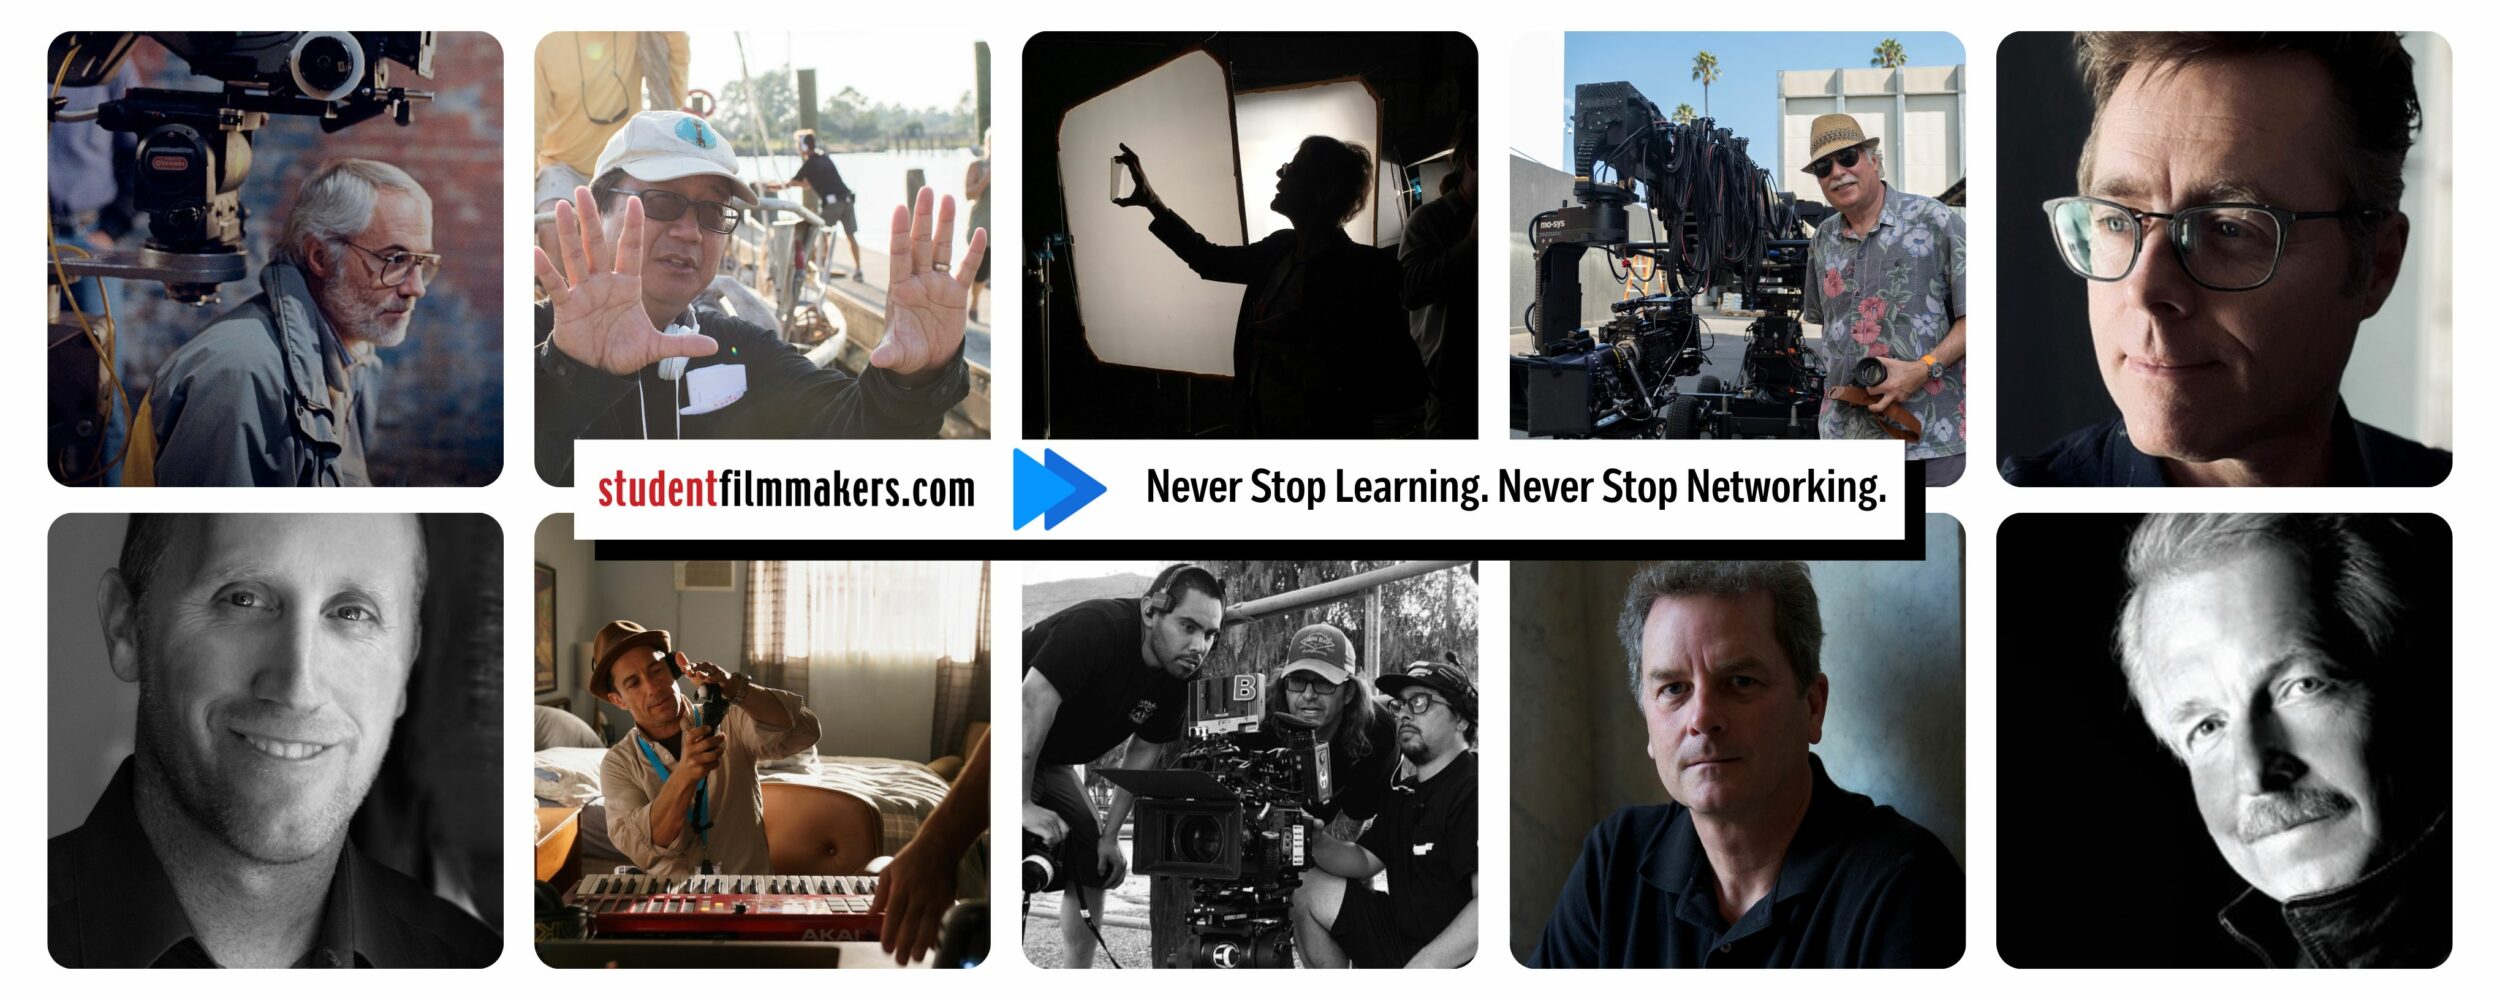 StudentFilmmakers Webinars - Speakers and Mentors